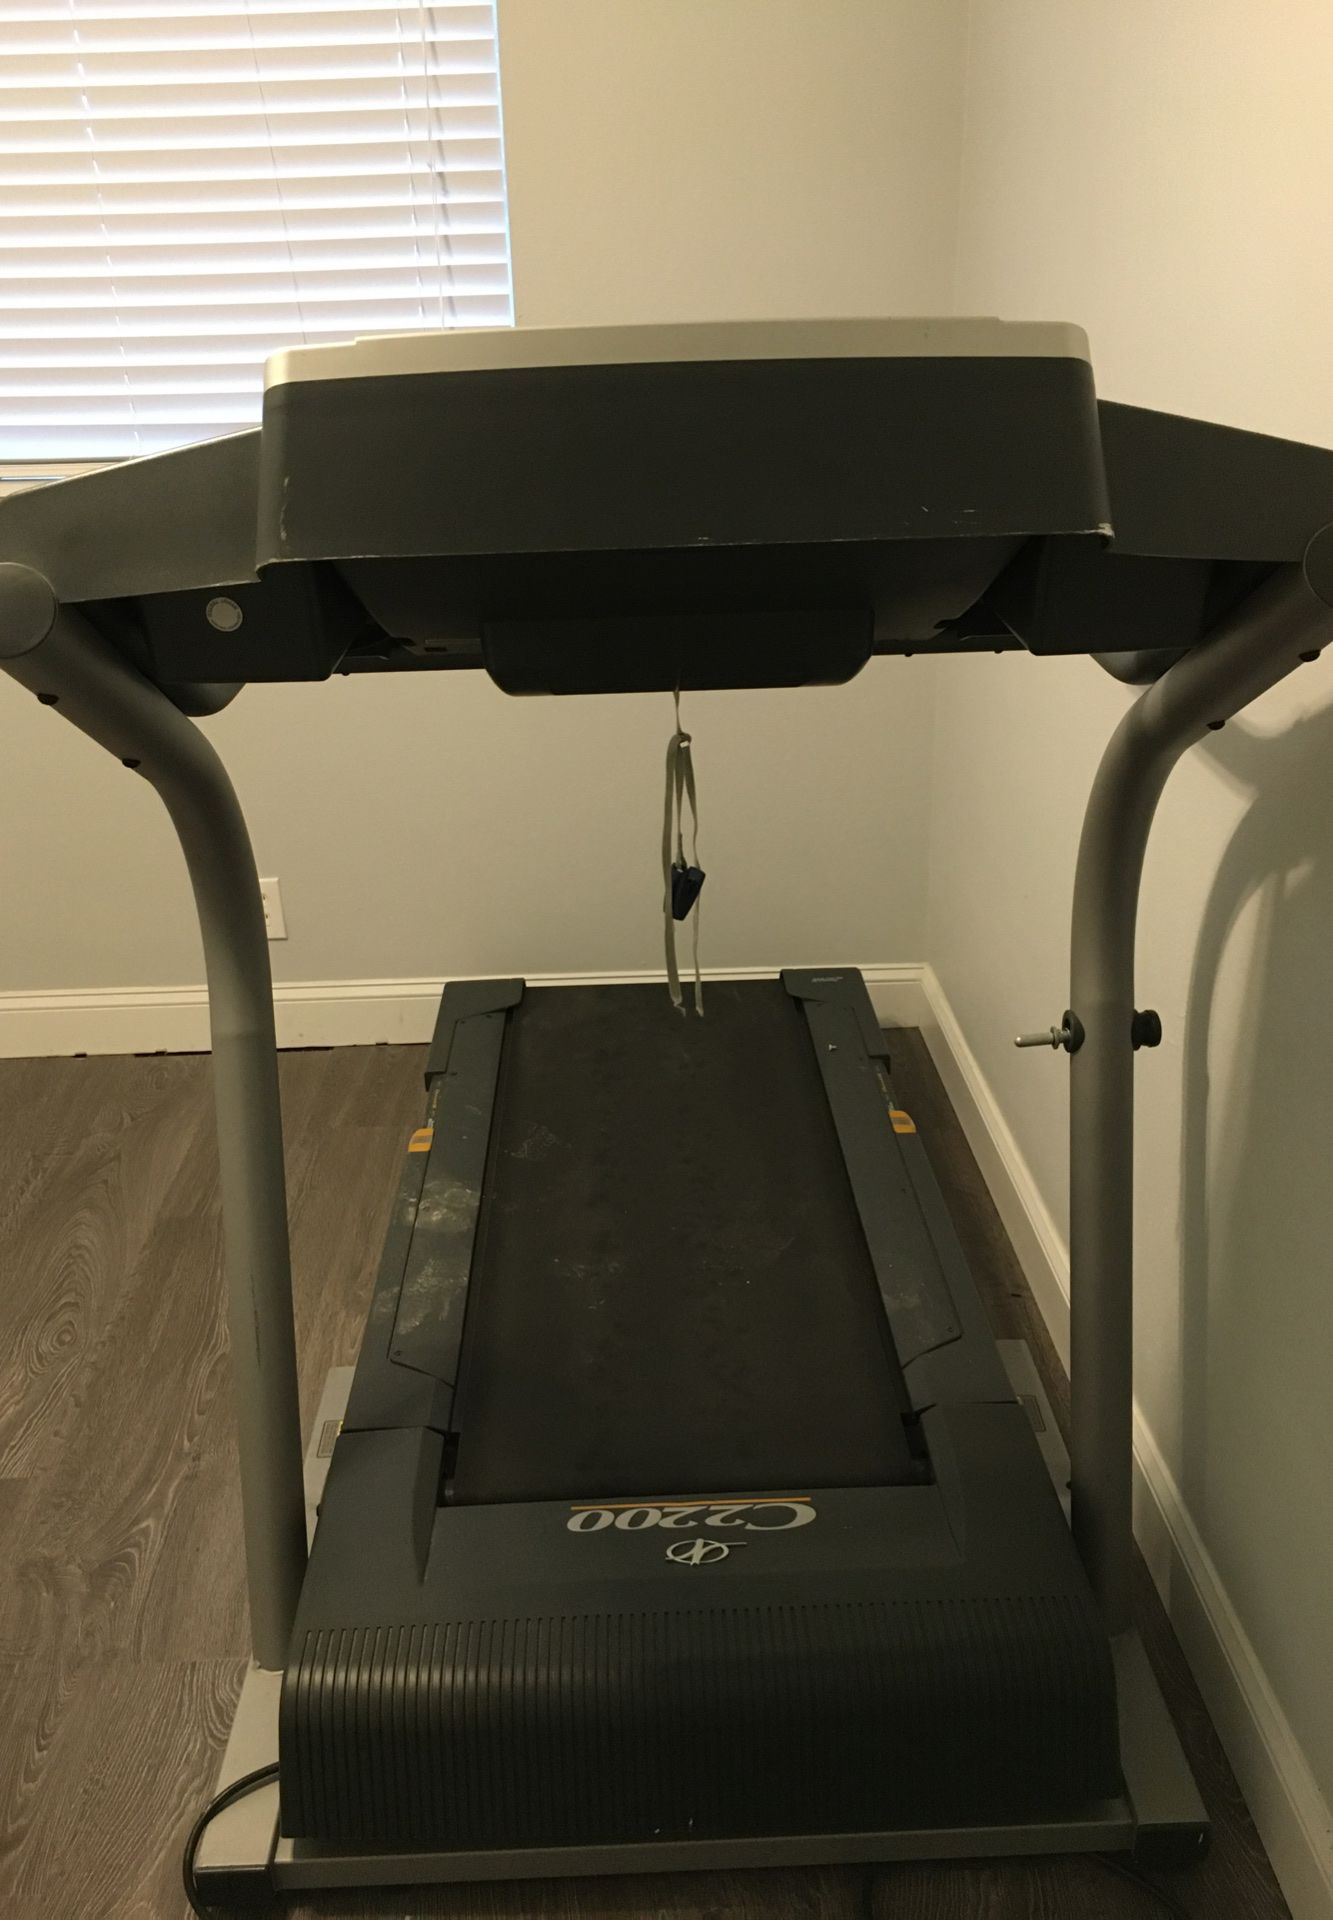 Nordictrack c 22000 treadmill